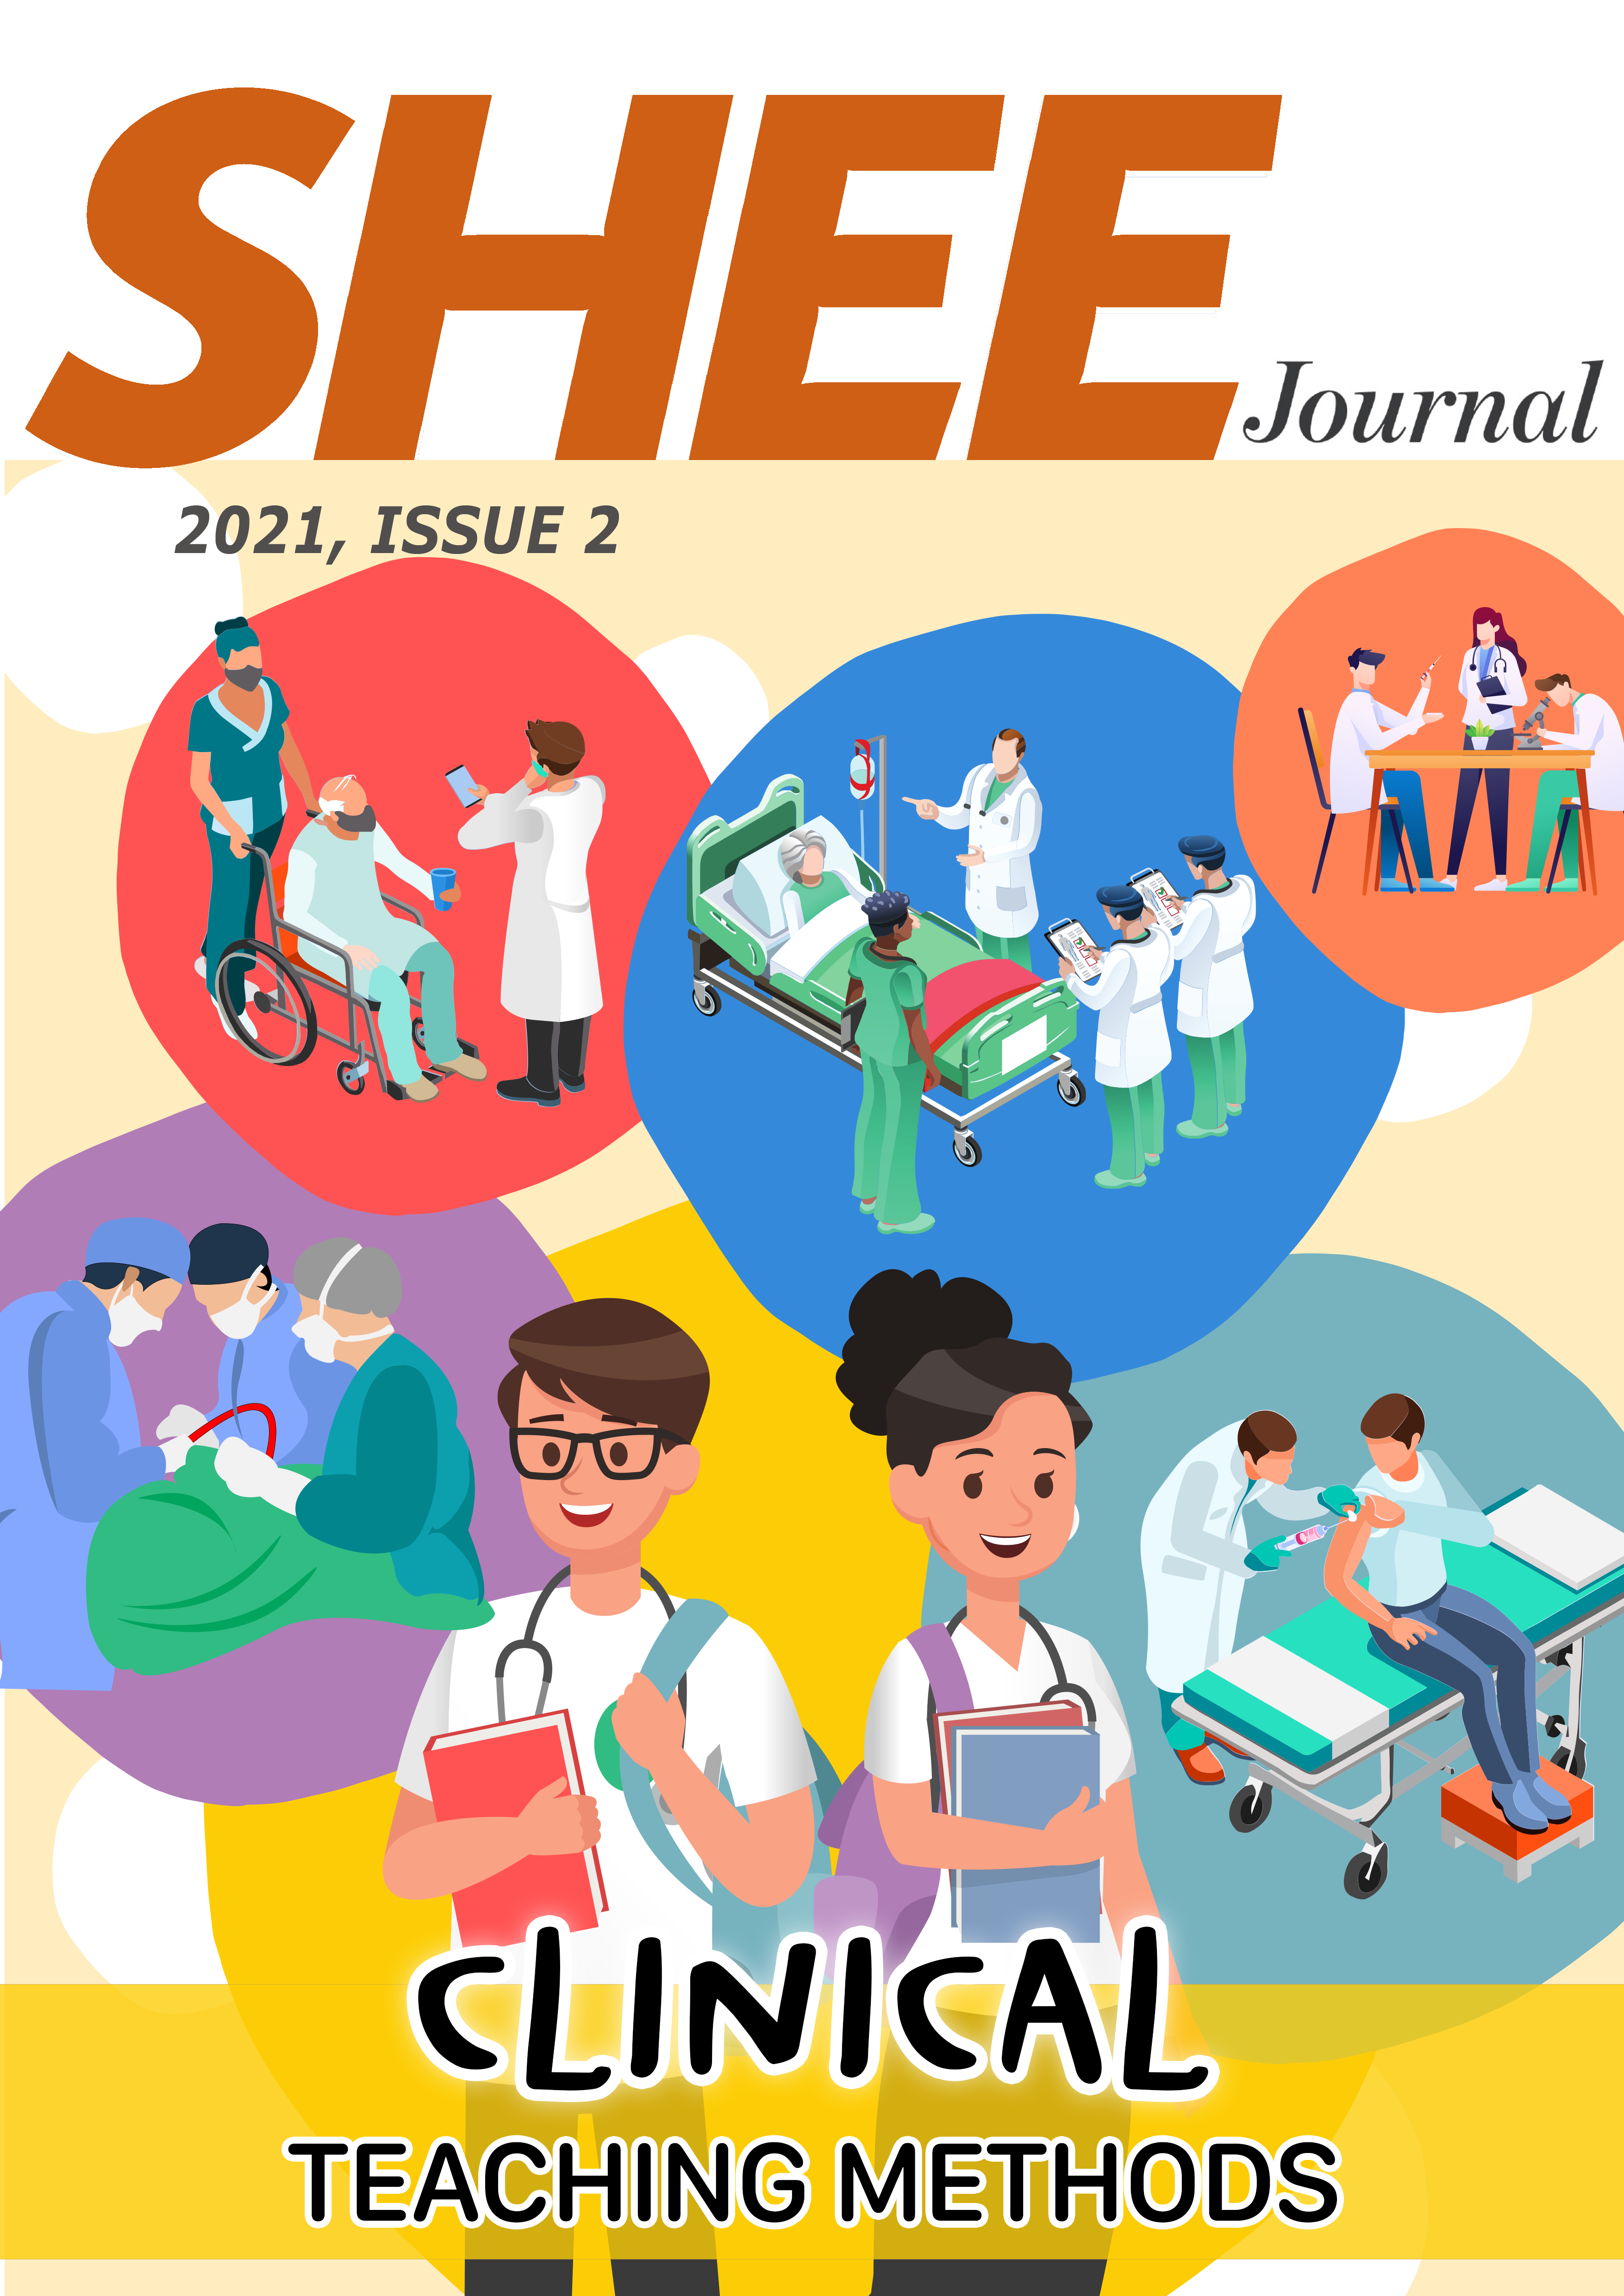 Journal Issue 2, 2021 เรื่อง Clinical teaching methods